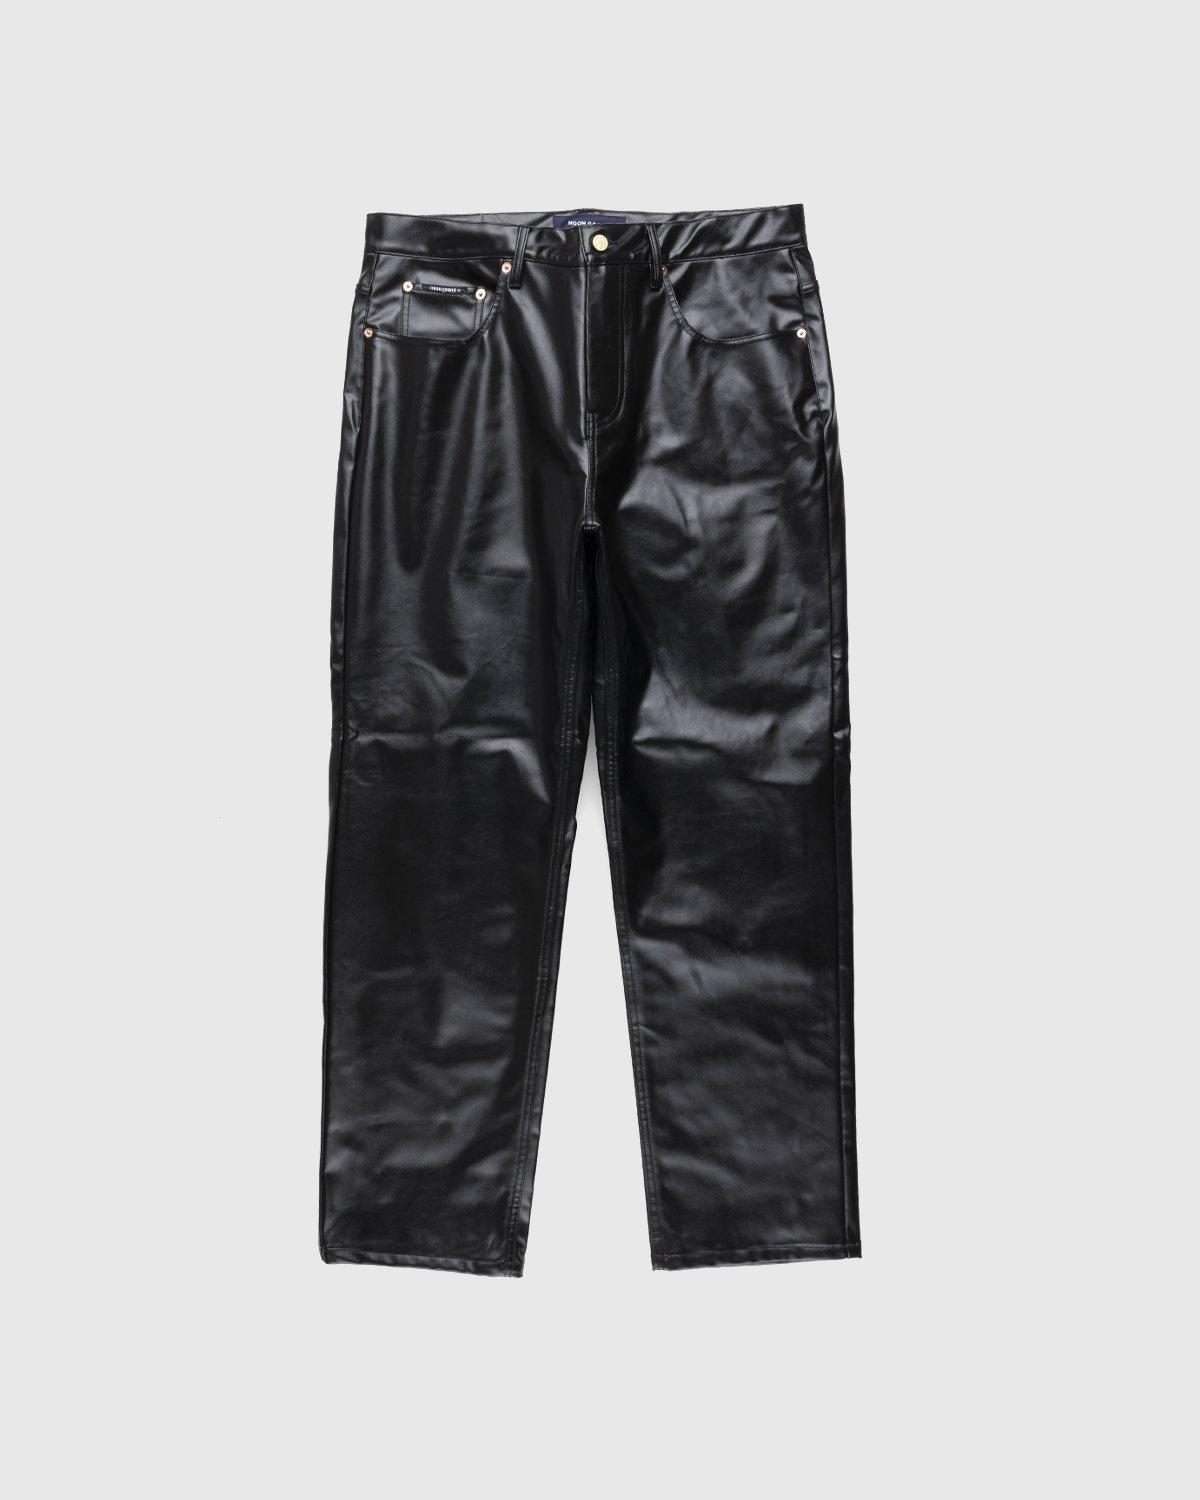 Noon Goons – Series Leather Pant Black - Pants - Black - Image 1